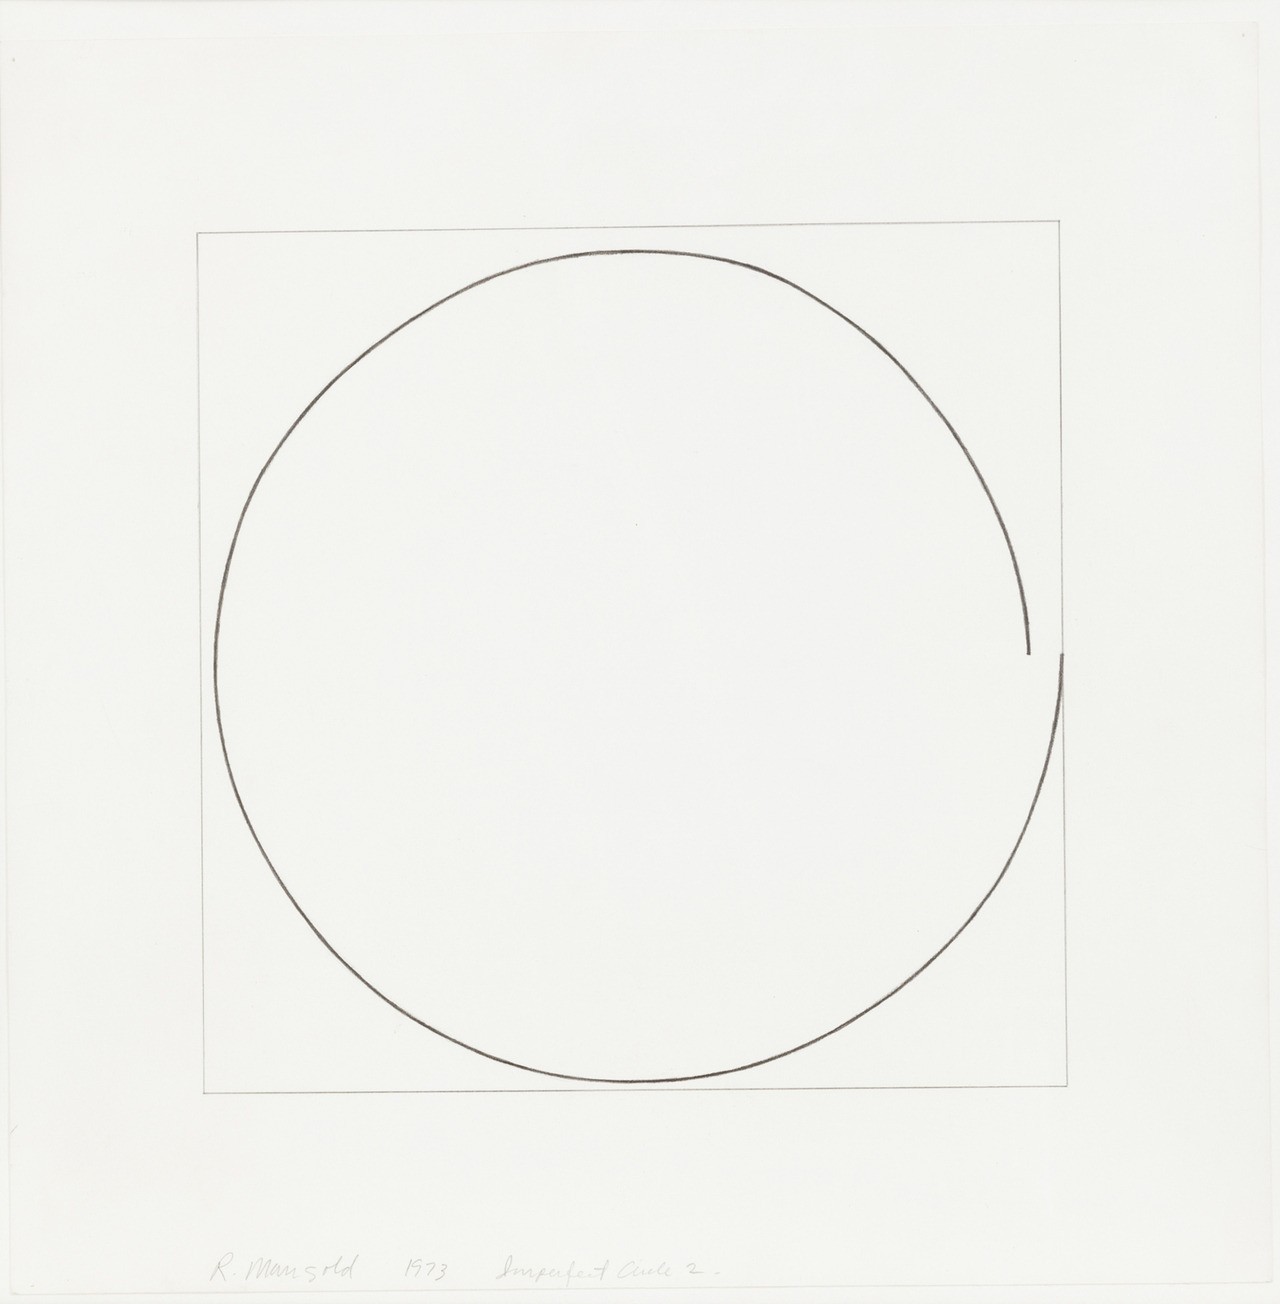 Robert Mangold, Imperfect Circle, 1973